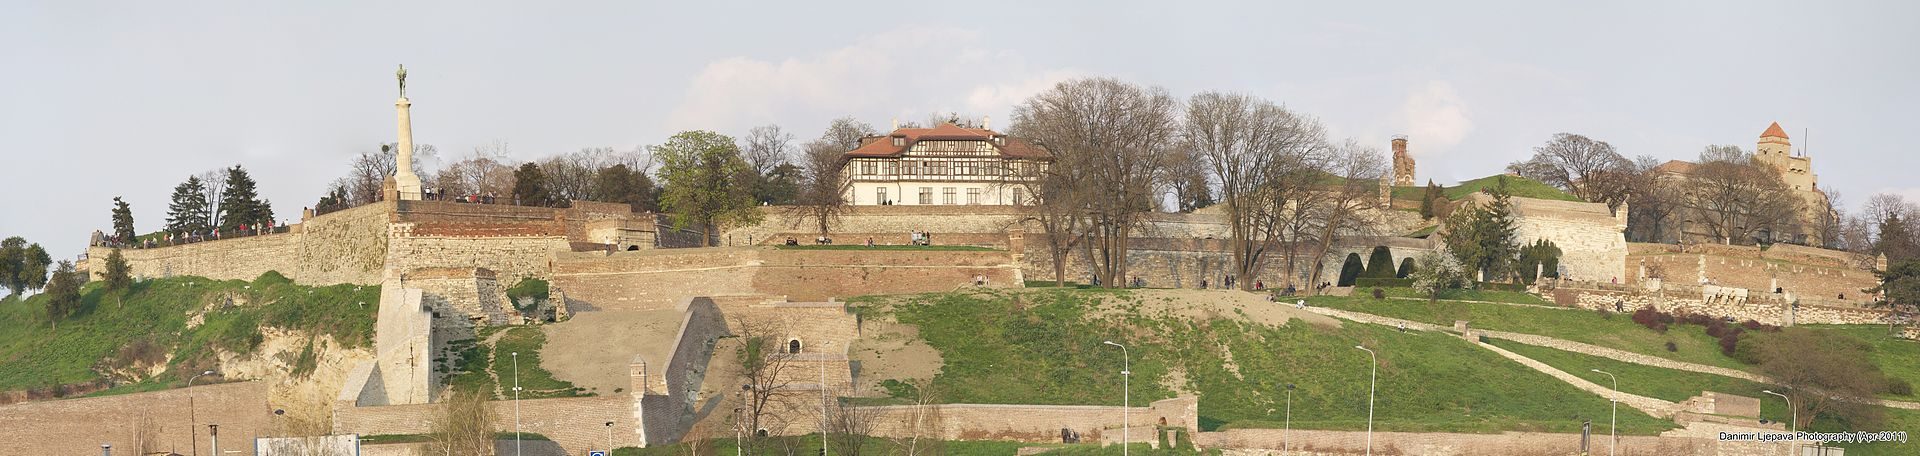 Festung Belgrad oder Kalemegdan, Belgrad, Serbien